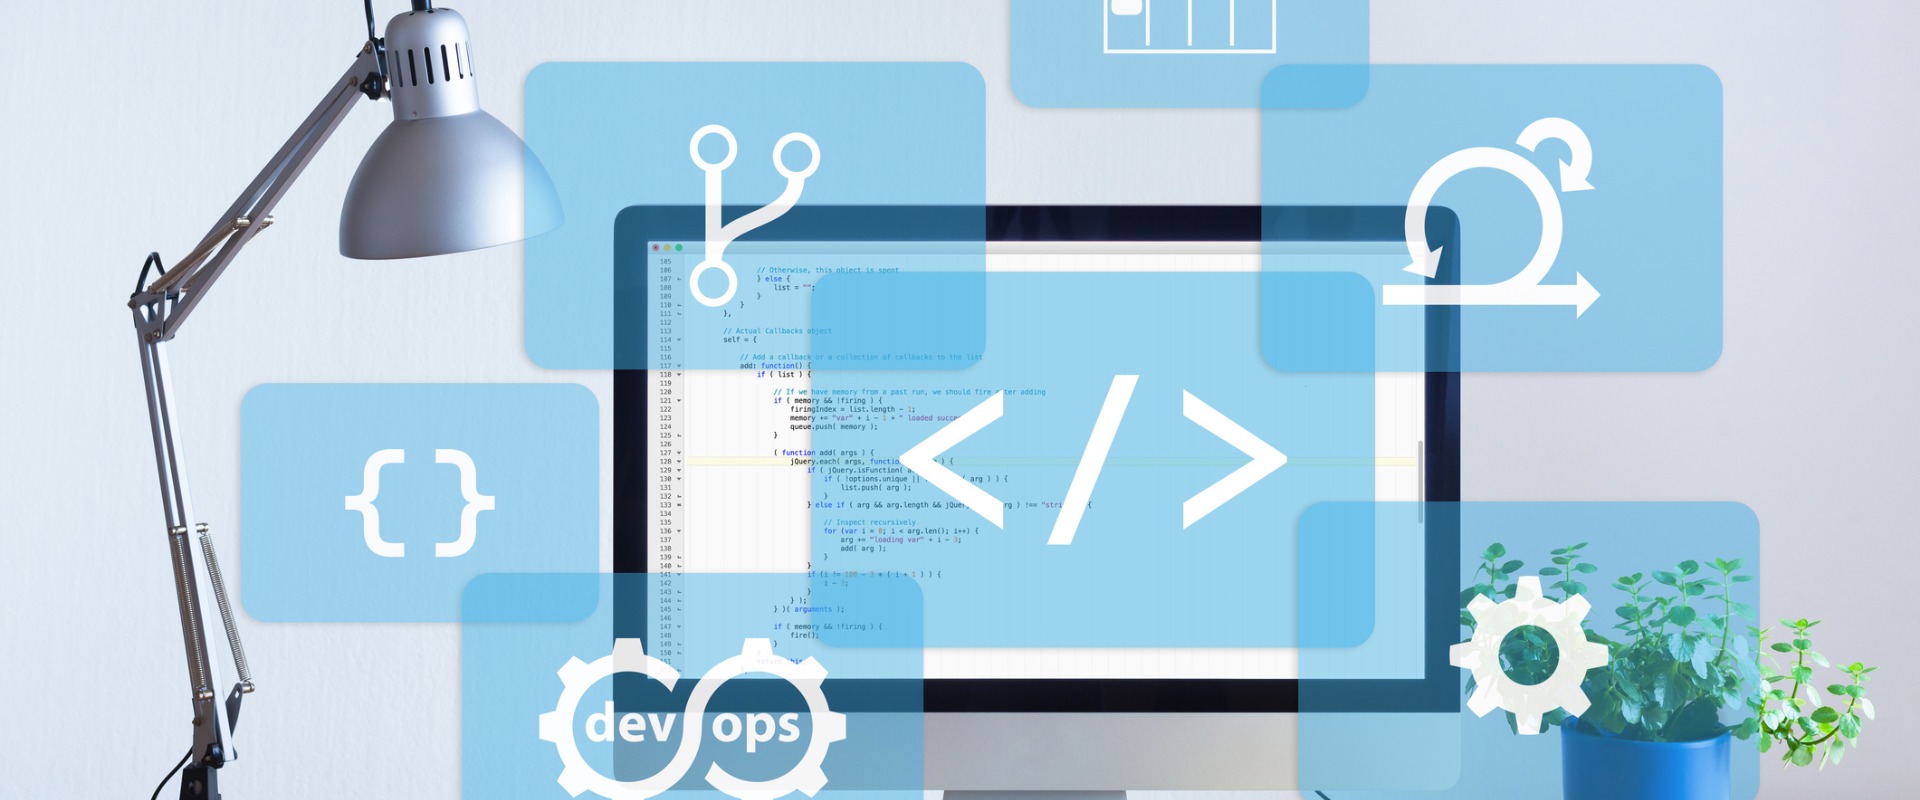 Illustration showing software development